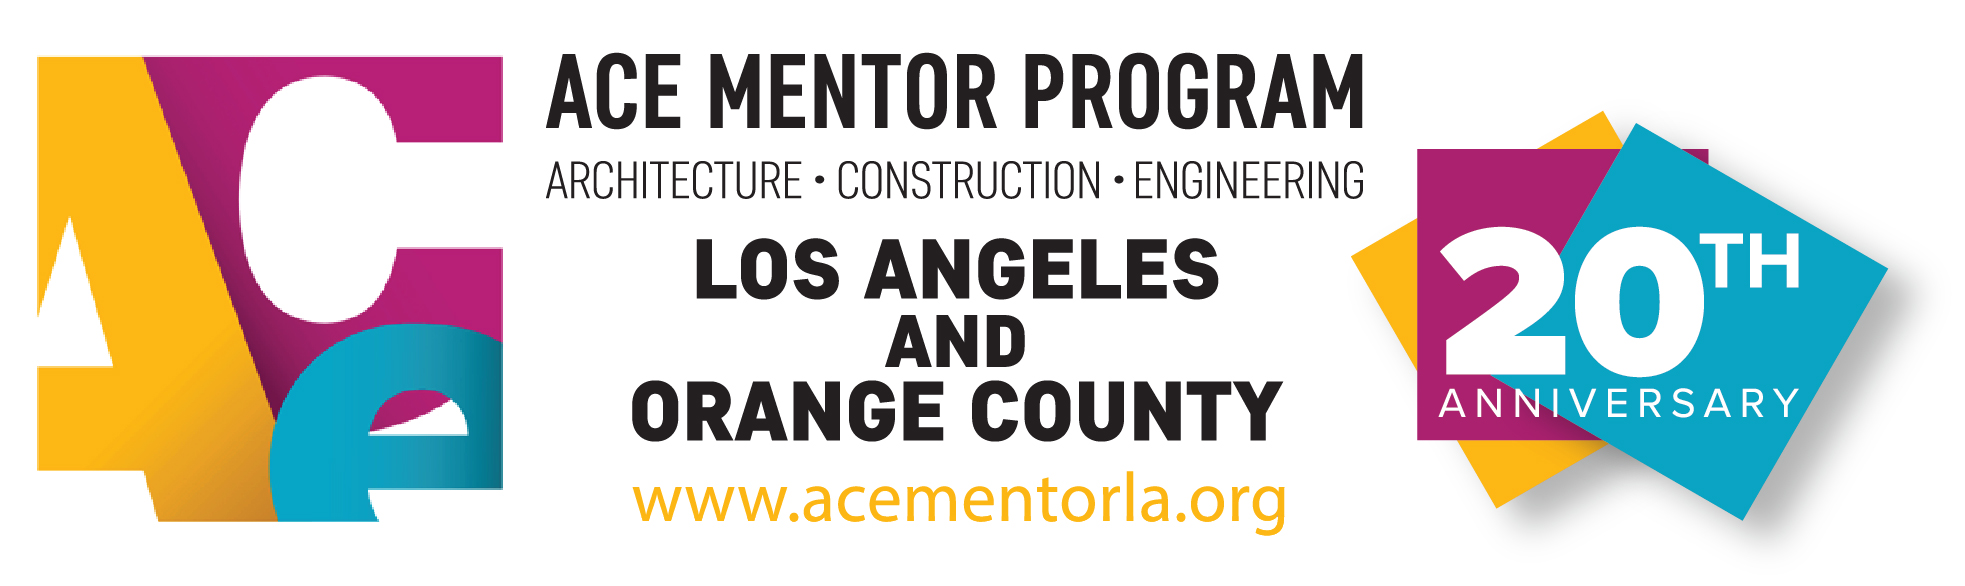 ACE MENTOR PROGRAM - LOS ANGELES / ORANGE COUNTY AFFILIATE logo